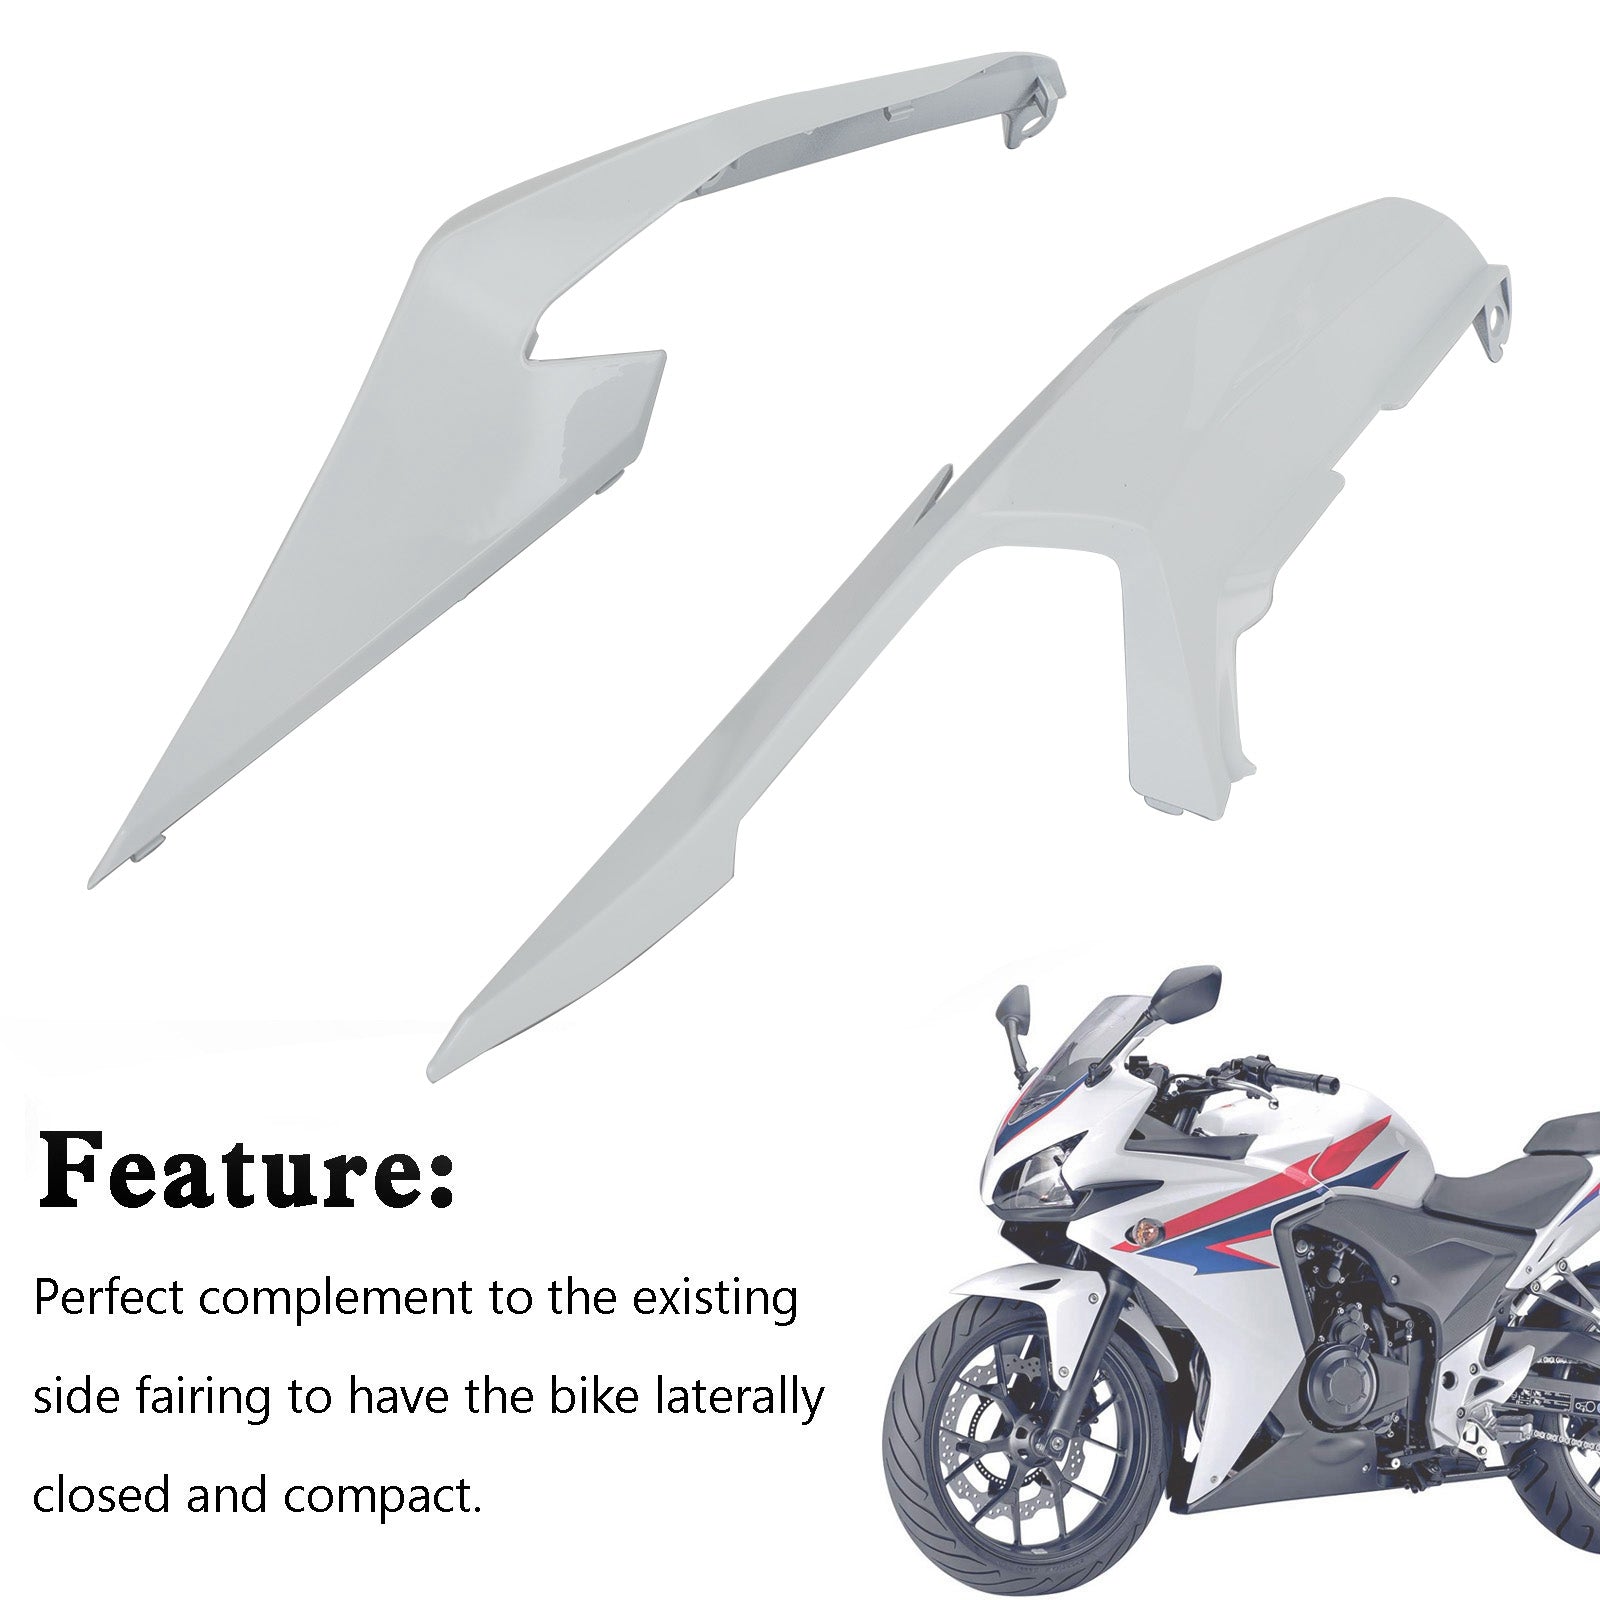 Rear Upper Tail Side Cover Fairing Cowl For Honda CBR500R 2019-2021 Generic